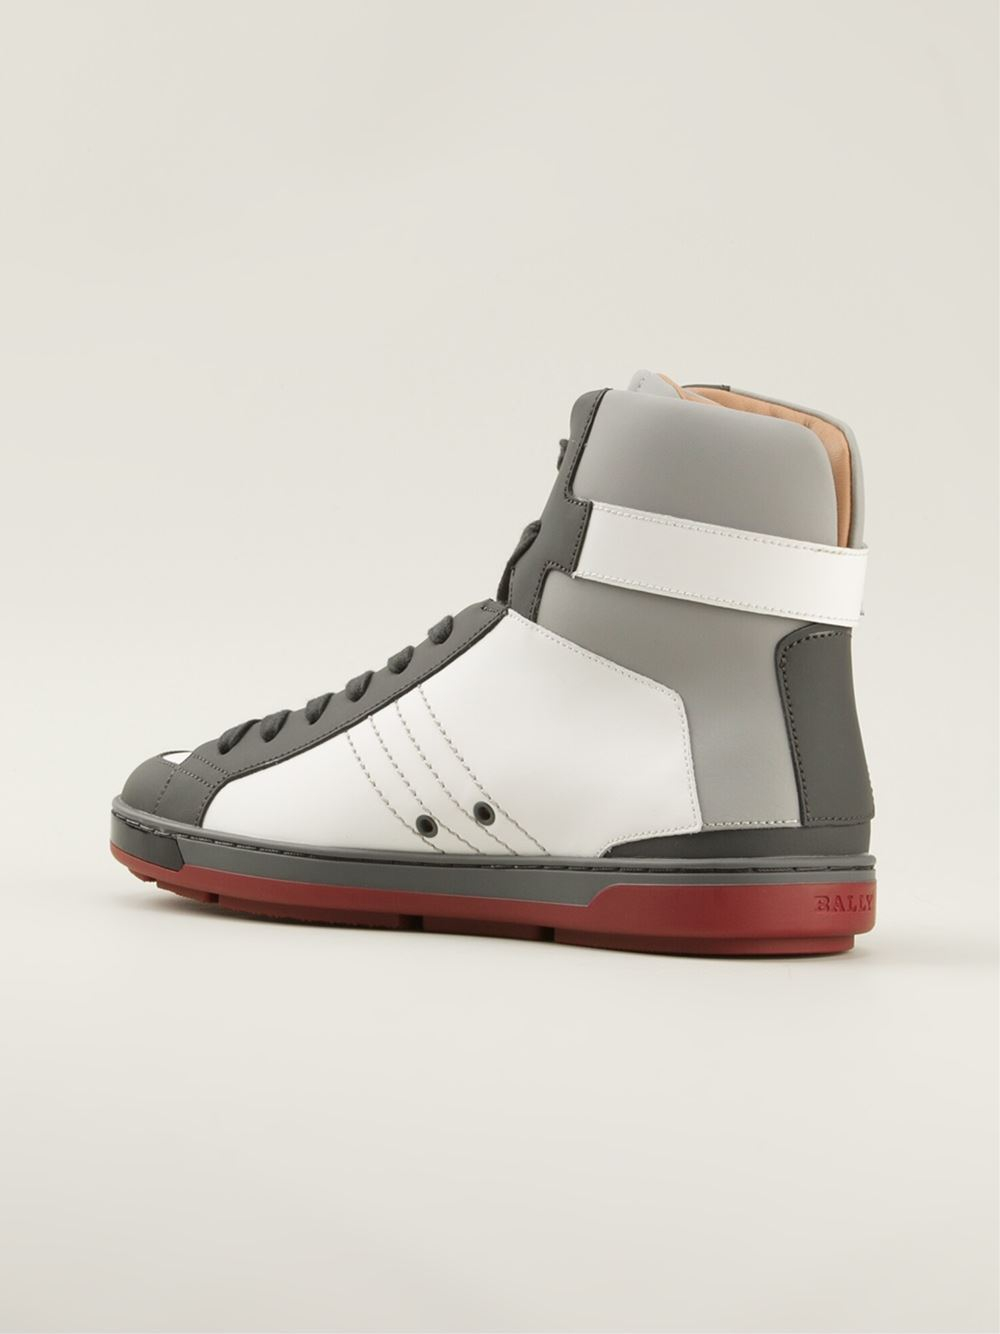 Bally 'Aikane' Hi-Top Sneakers in White (Gray) for Men - Lyst